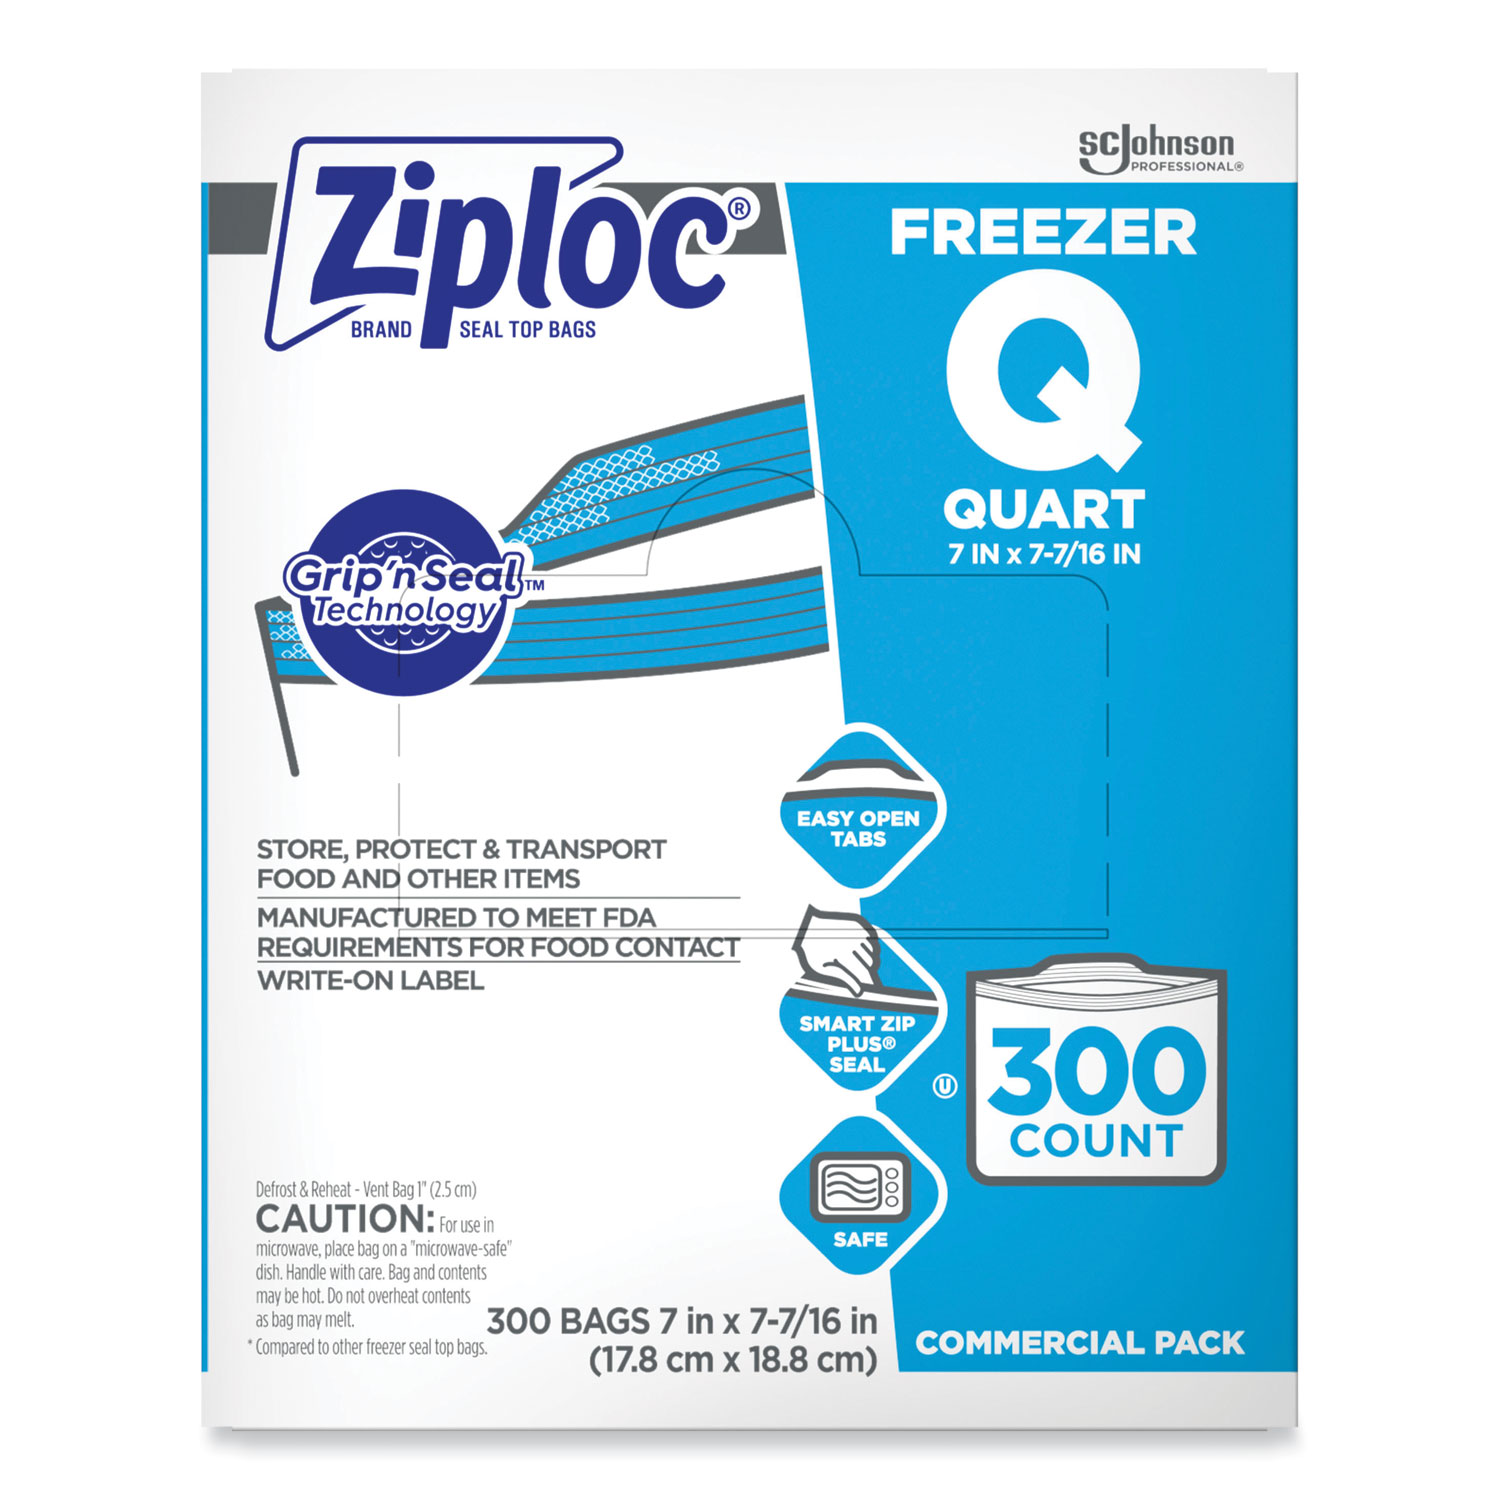 Ziploc Brand Slider Storage Quart Bags, Zipper Storage Bags, 76